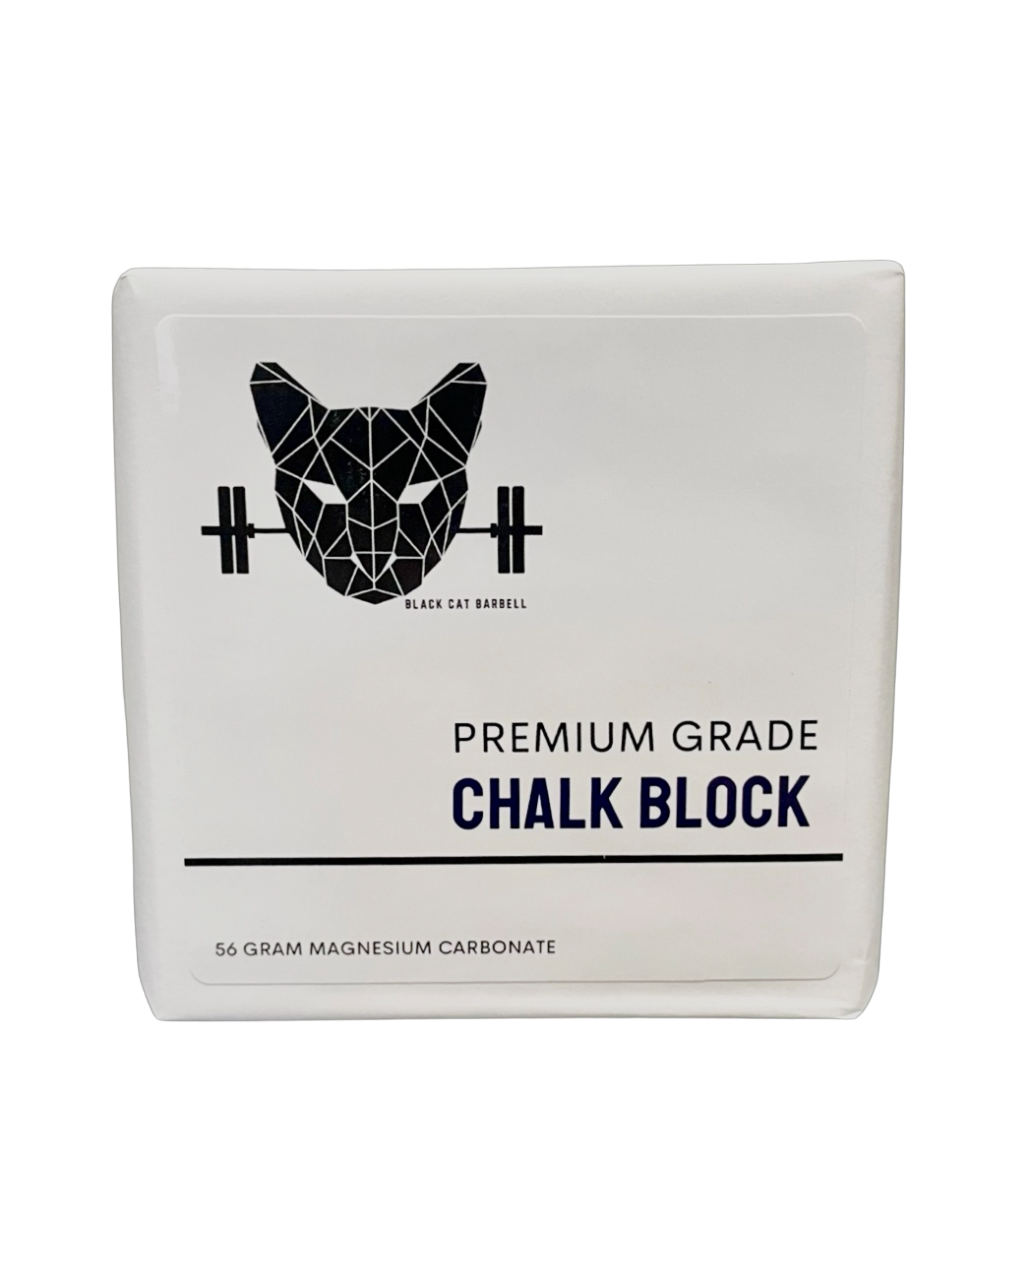 Chalk block